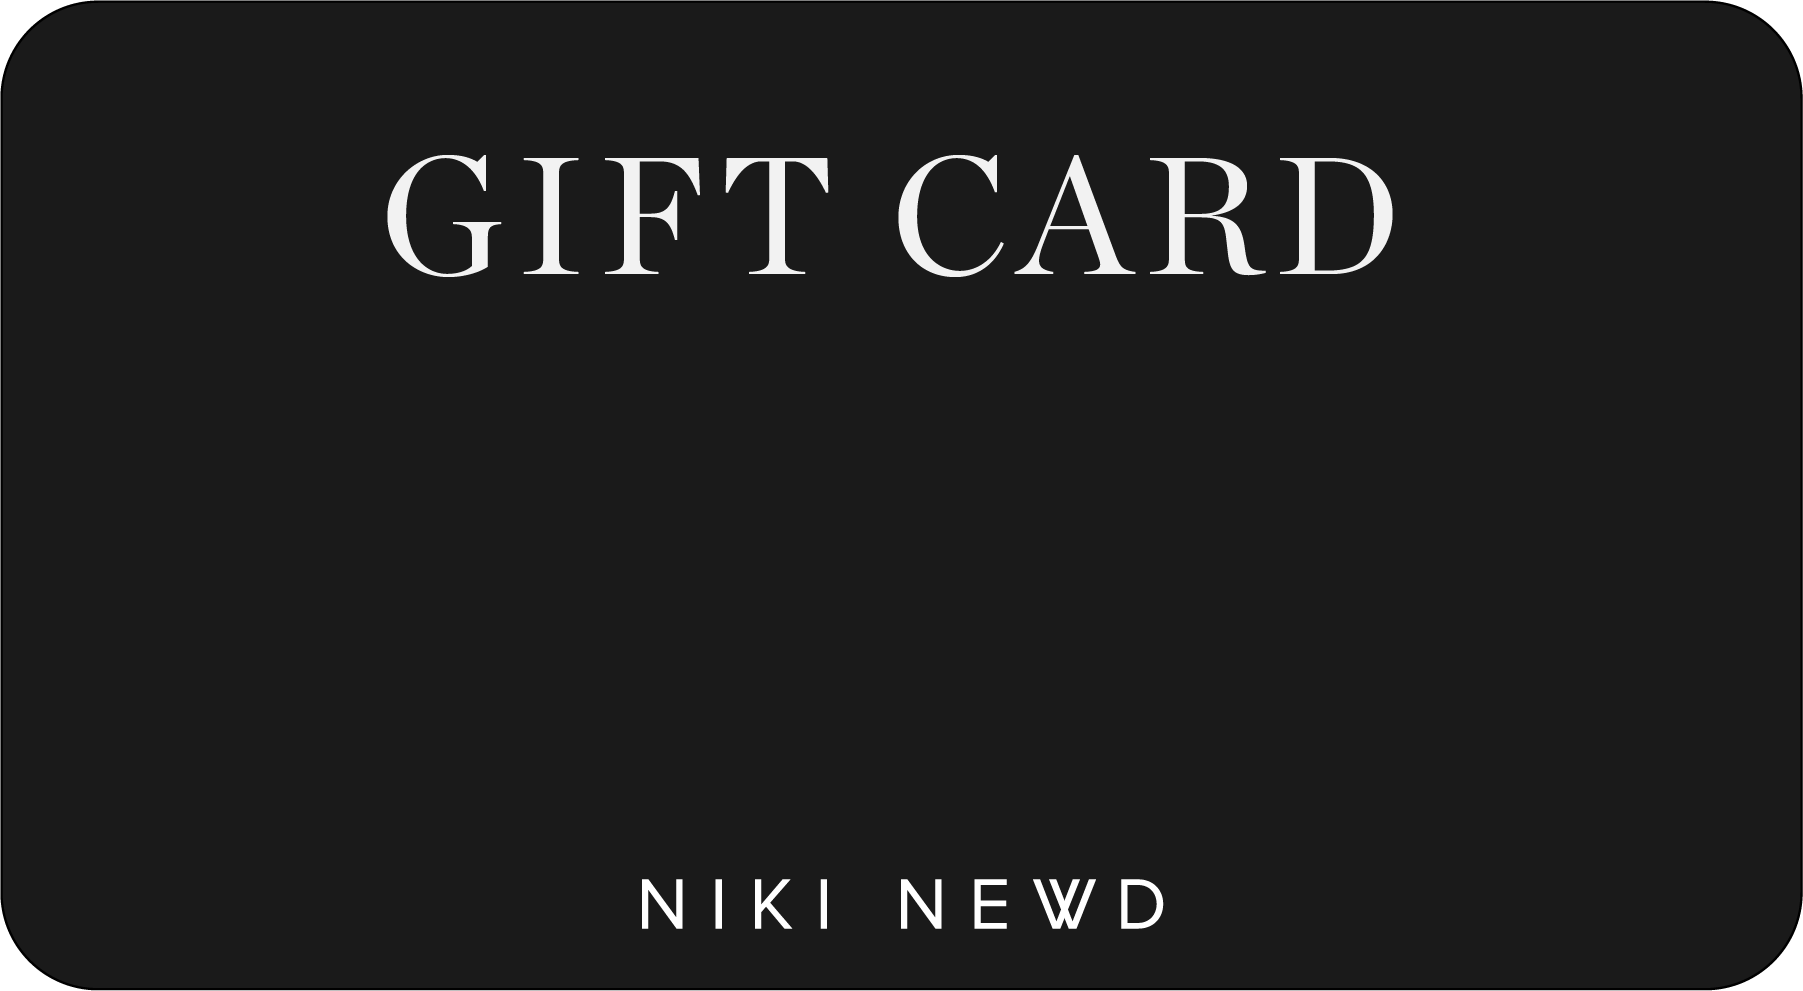 Gift Card - Relax and destress massage & mini facial 45min